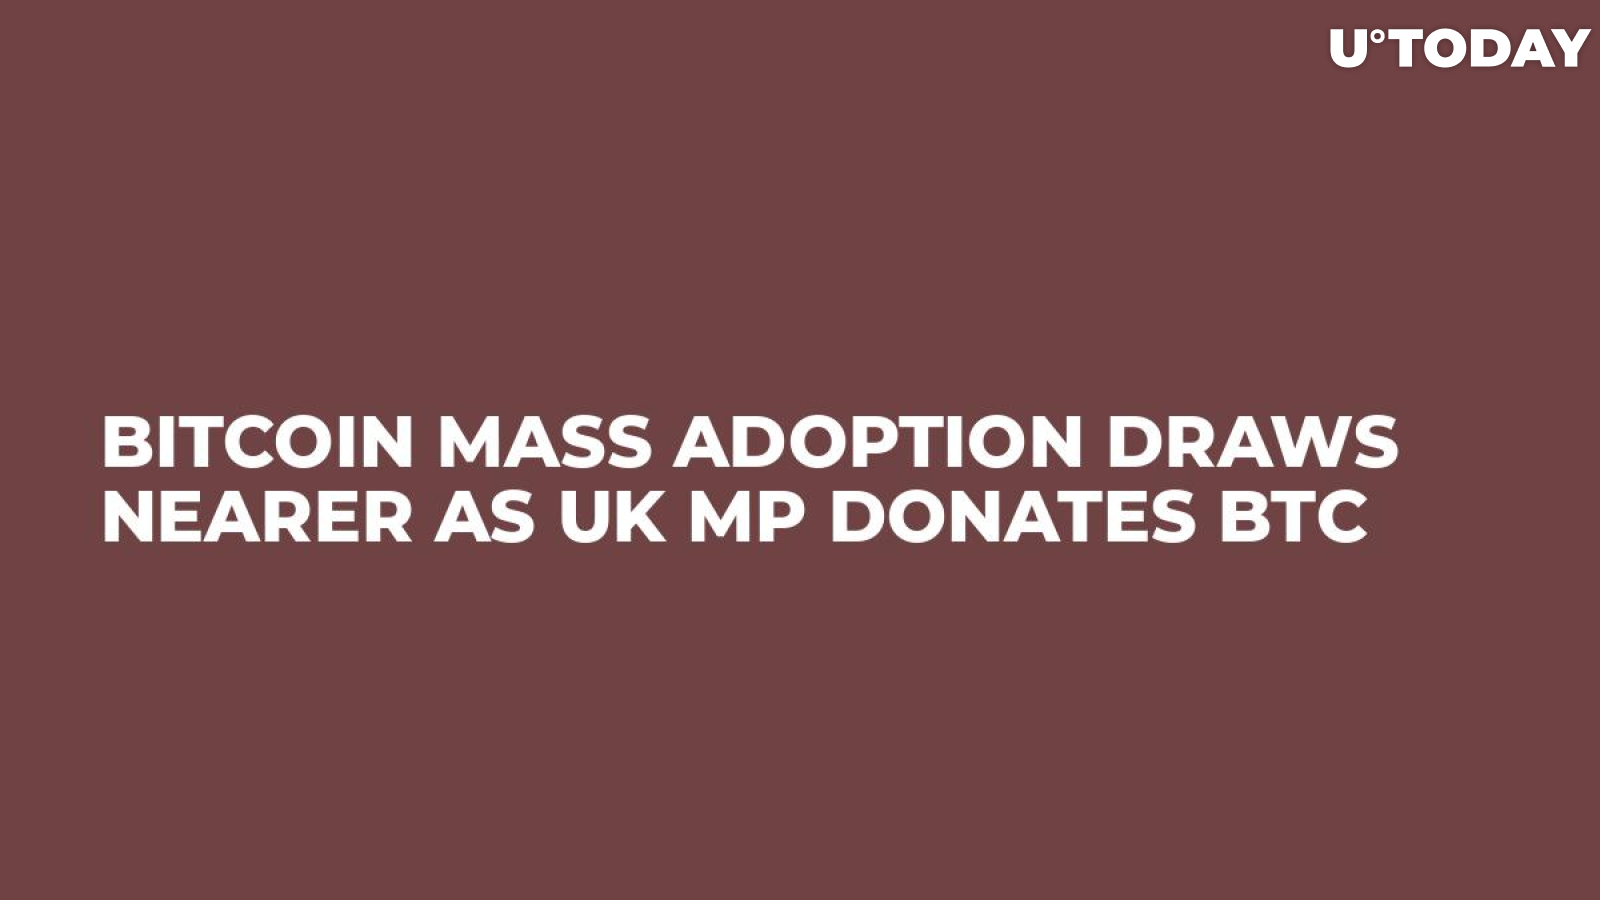 Bitcoin Mass Adoption Draws Nearer as UK MP Donates BTC